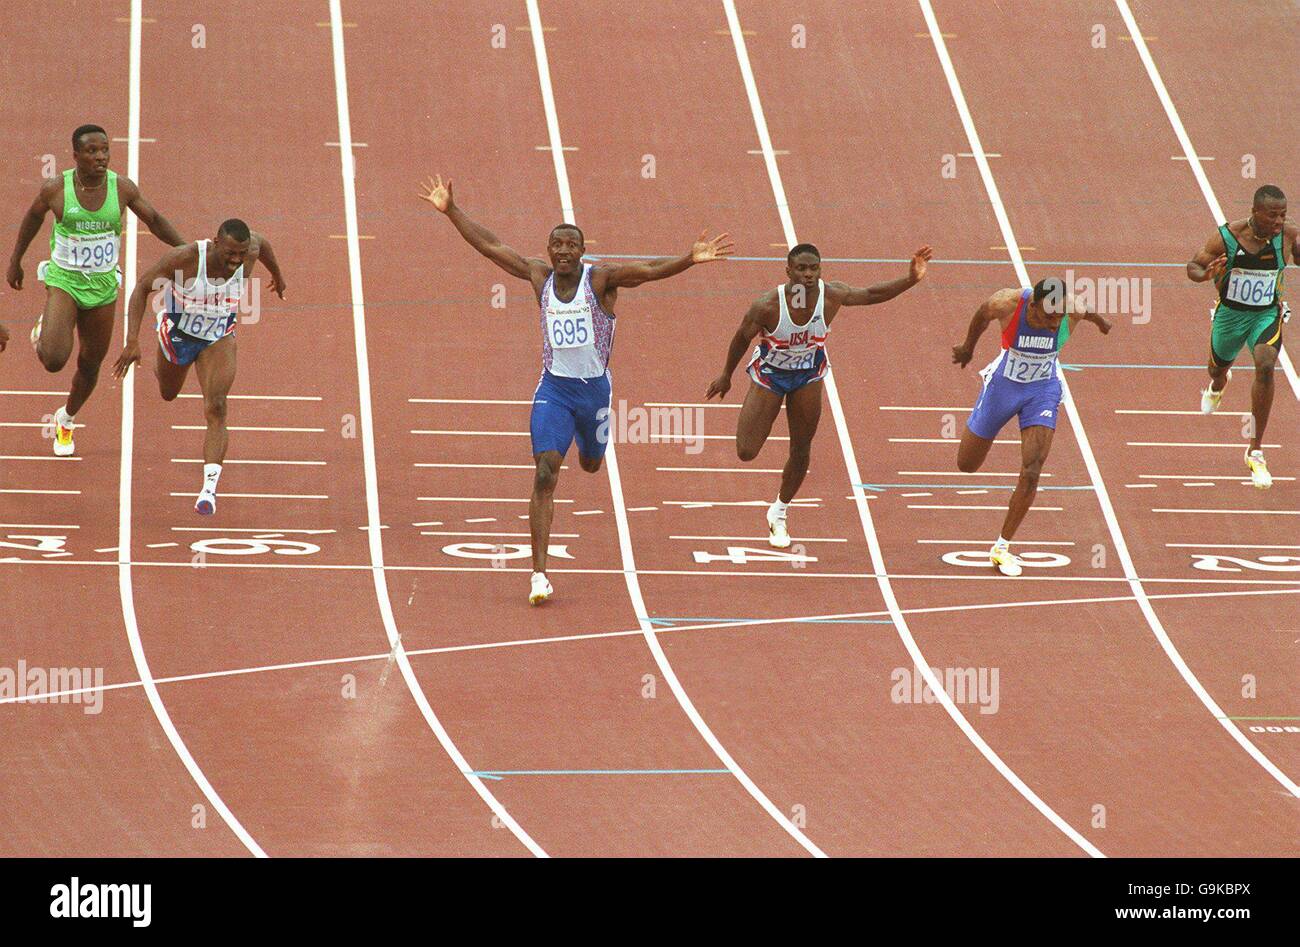 OLYMPICS BARCELONA ATHLETICS Athletics - Barcelona Olympic Games - Mens 100m Final Stock Photo